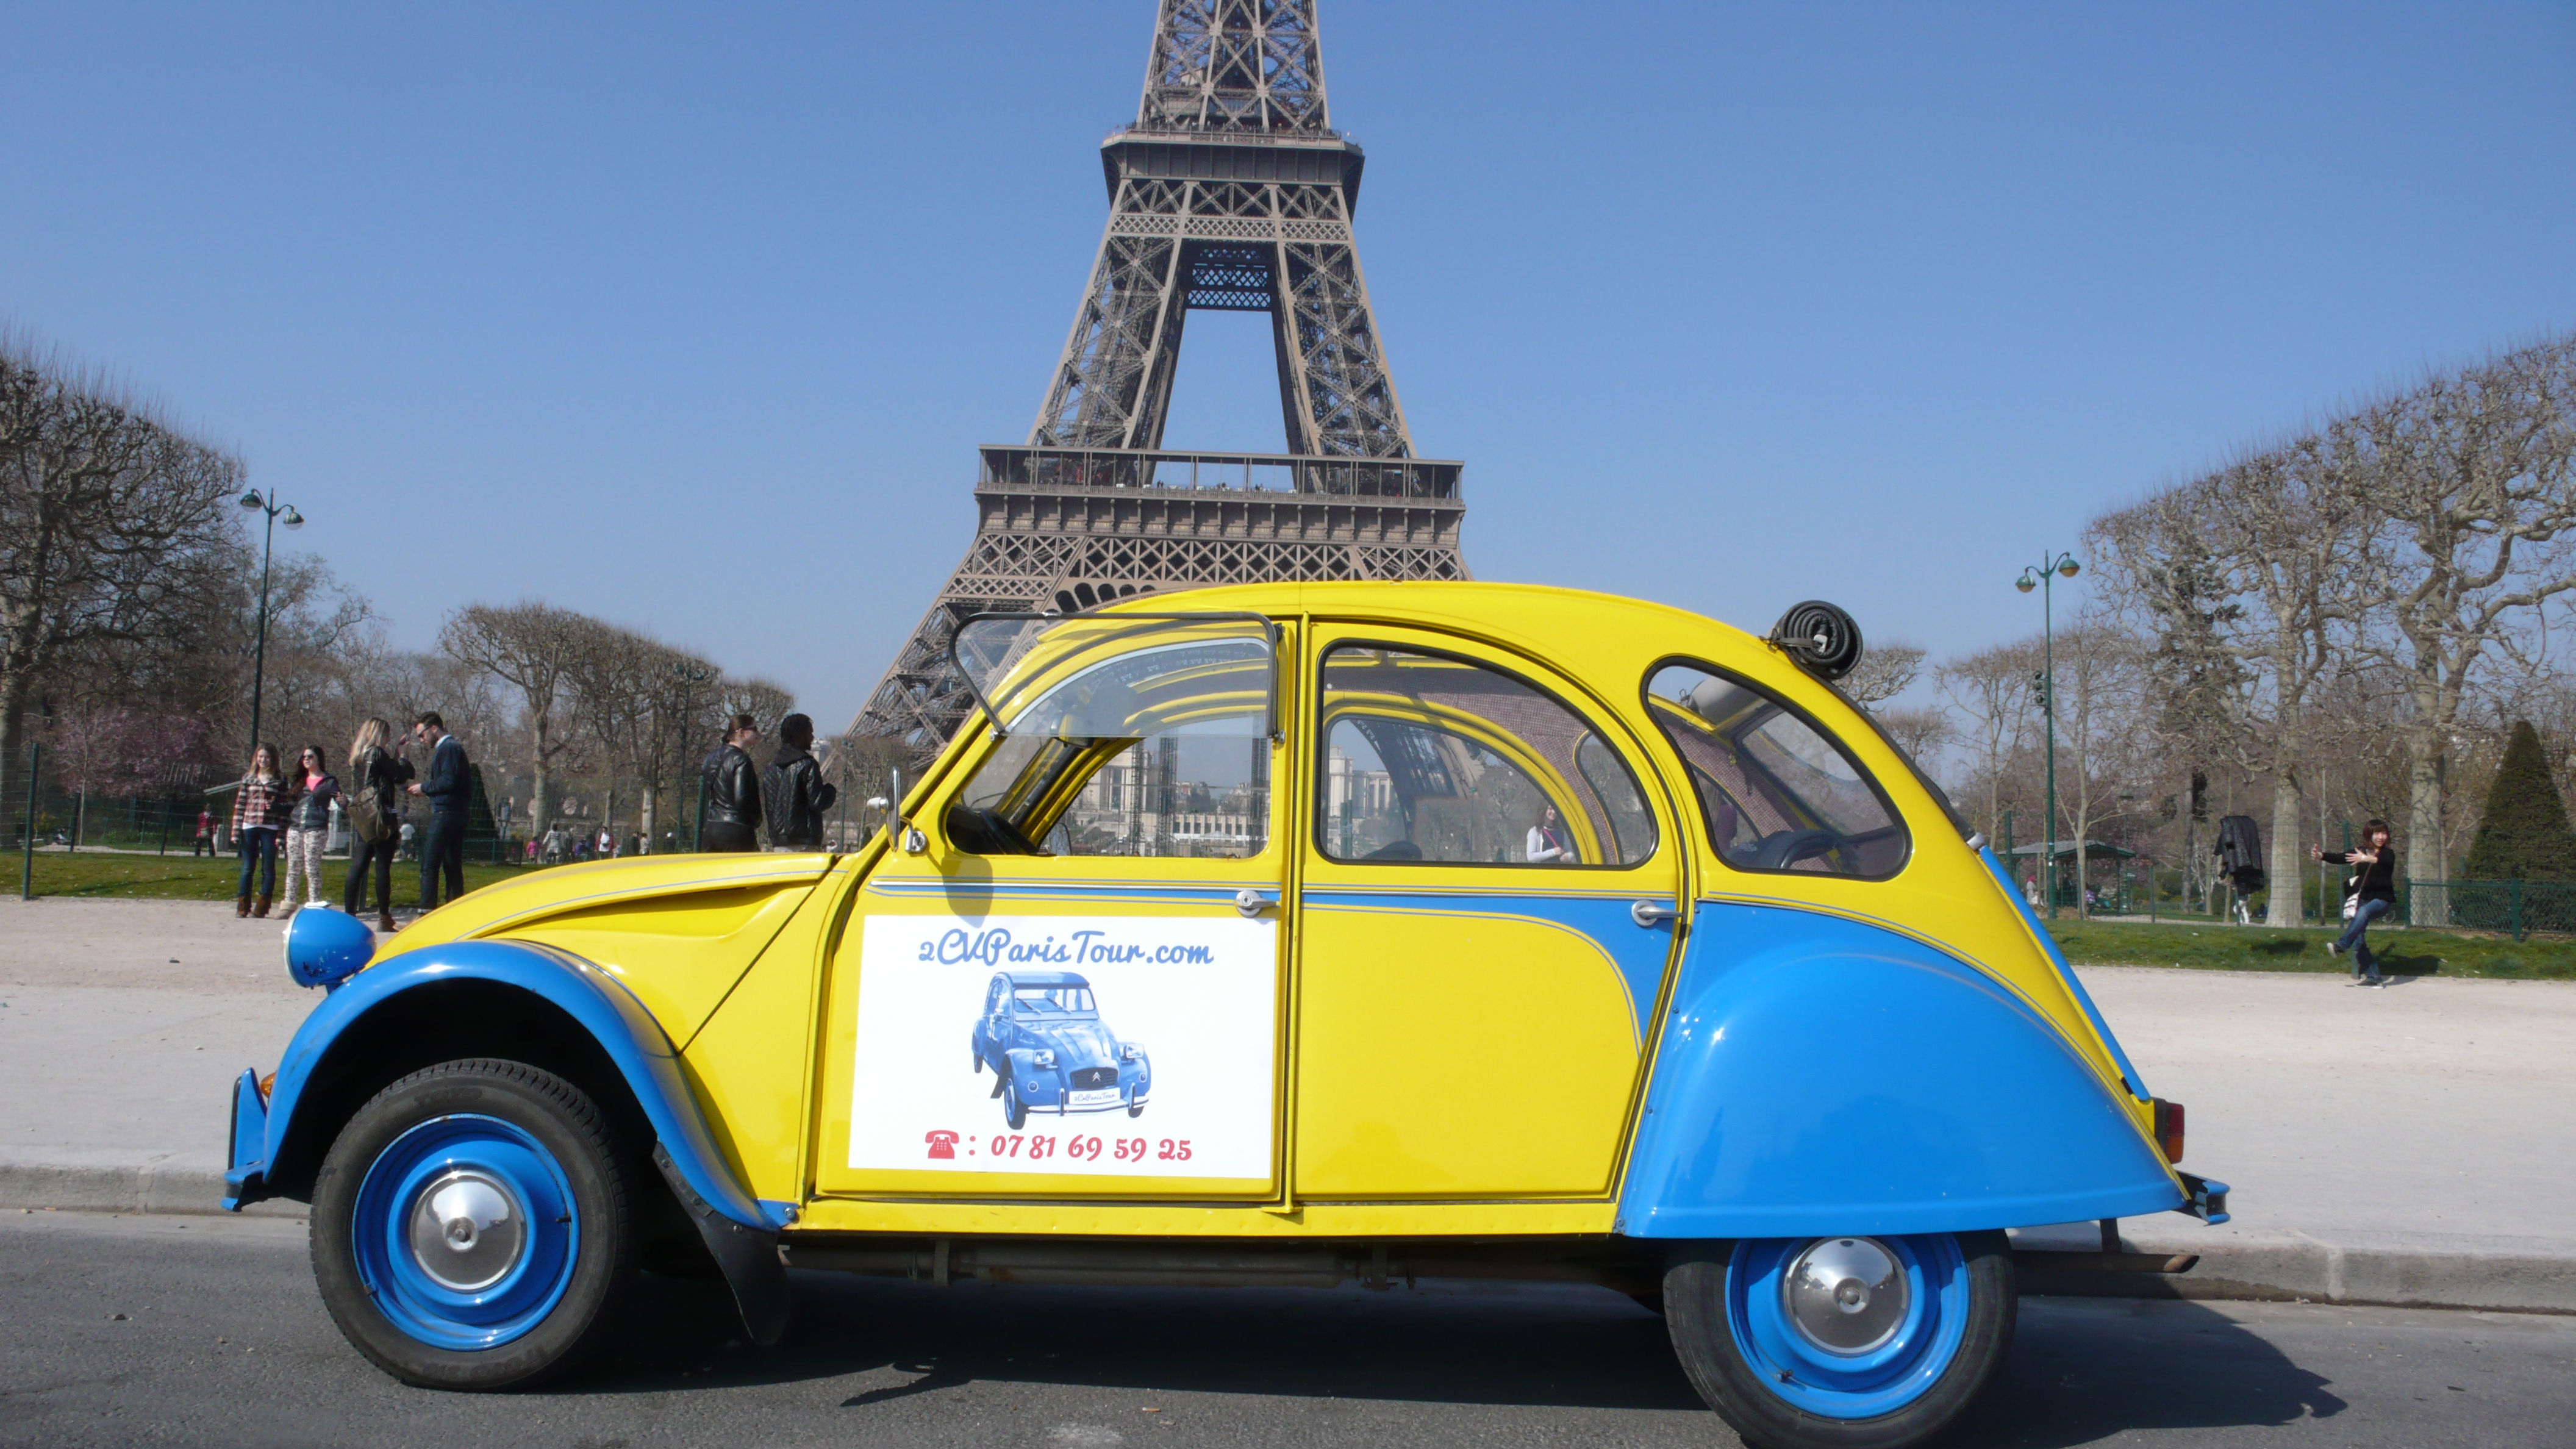 2CV Paris Tour : Visit Paris by 2CV! 2CV, Sun and Eiffel Tower